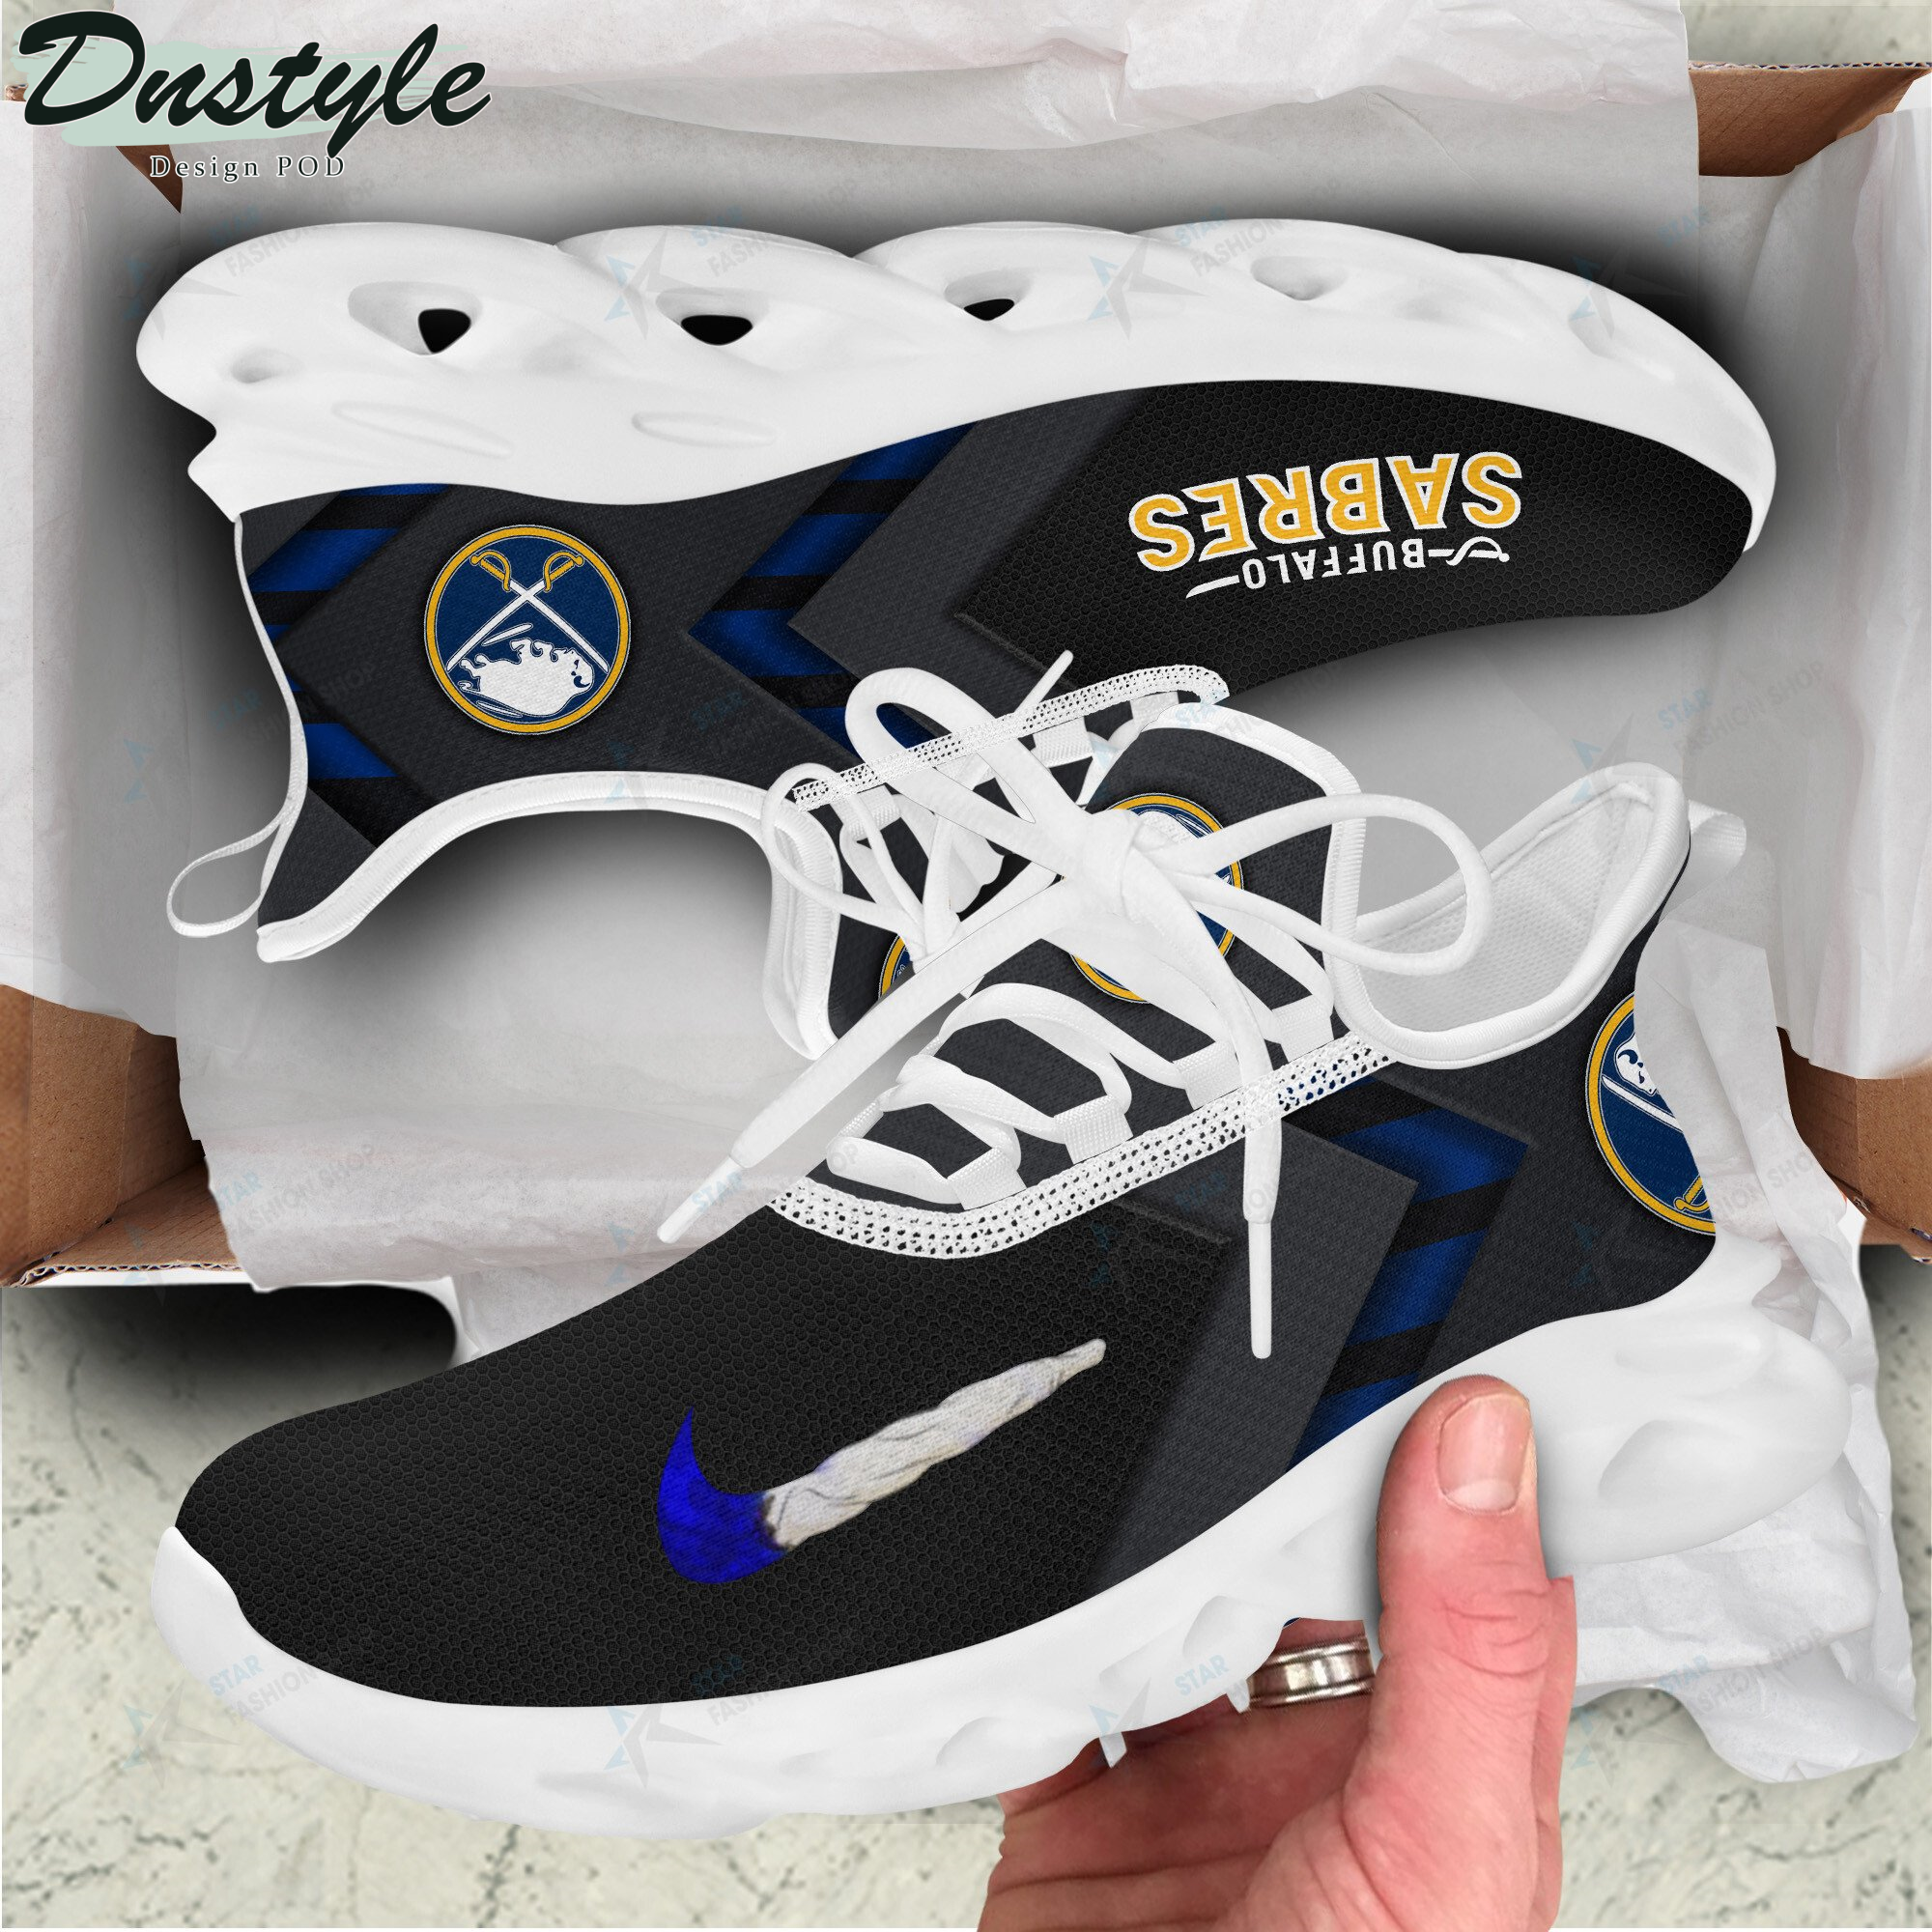 Buffalo Sabres max soul shoes